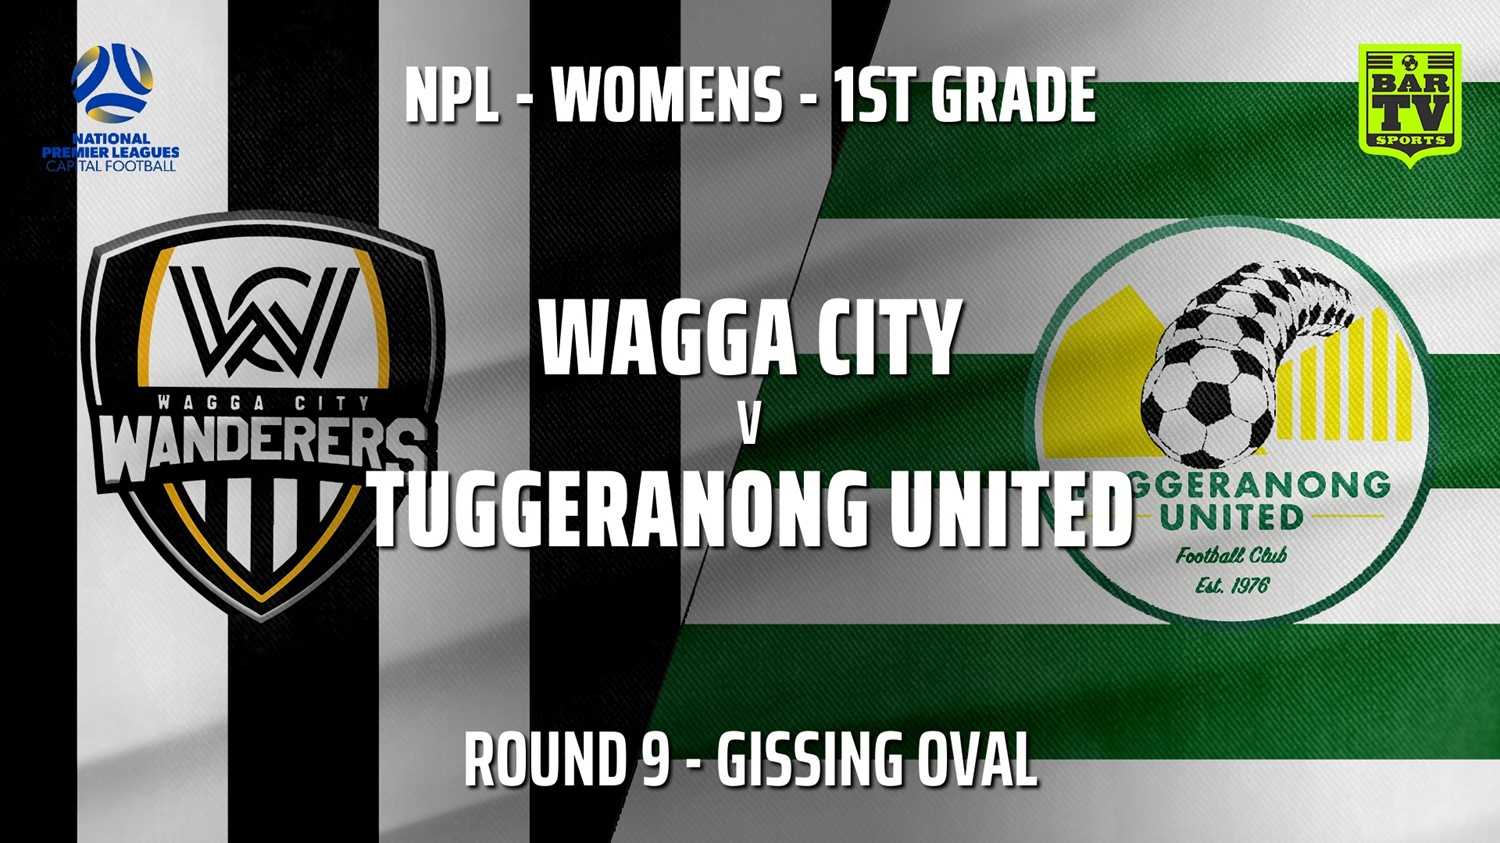 210613-Capital Womens Round 9 - Wagga City Wanderers FC (women) v Tuggeranong United FC (women) Minigame Slate Image